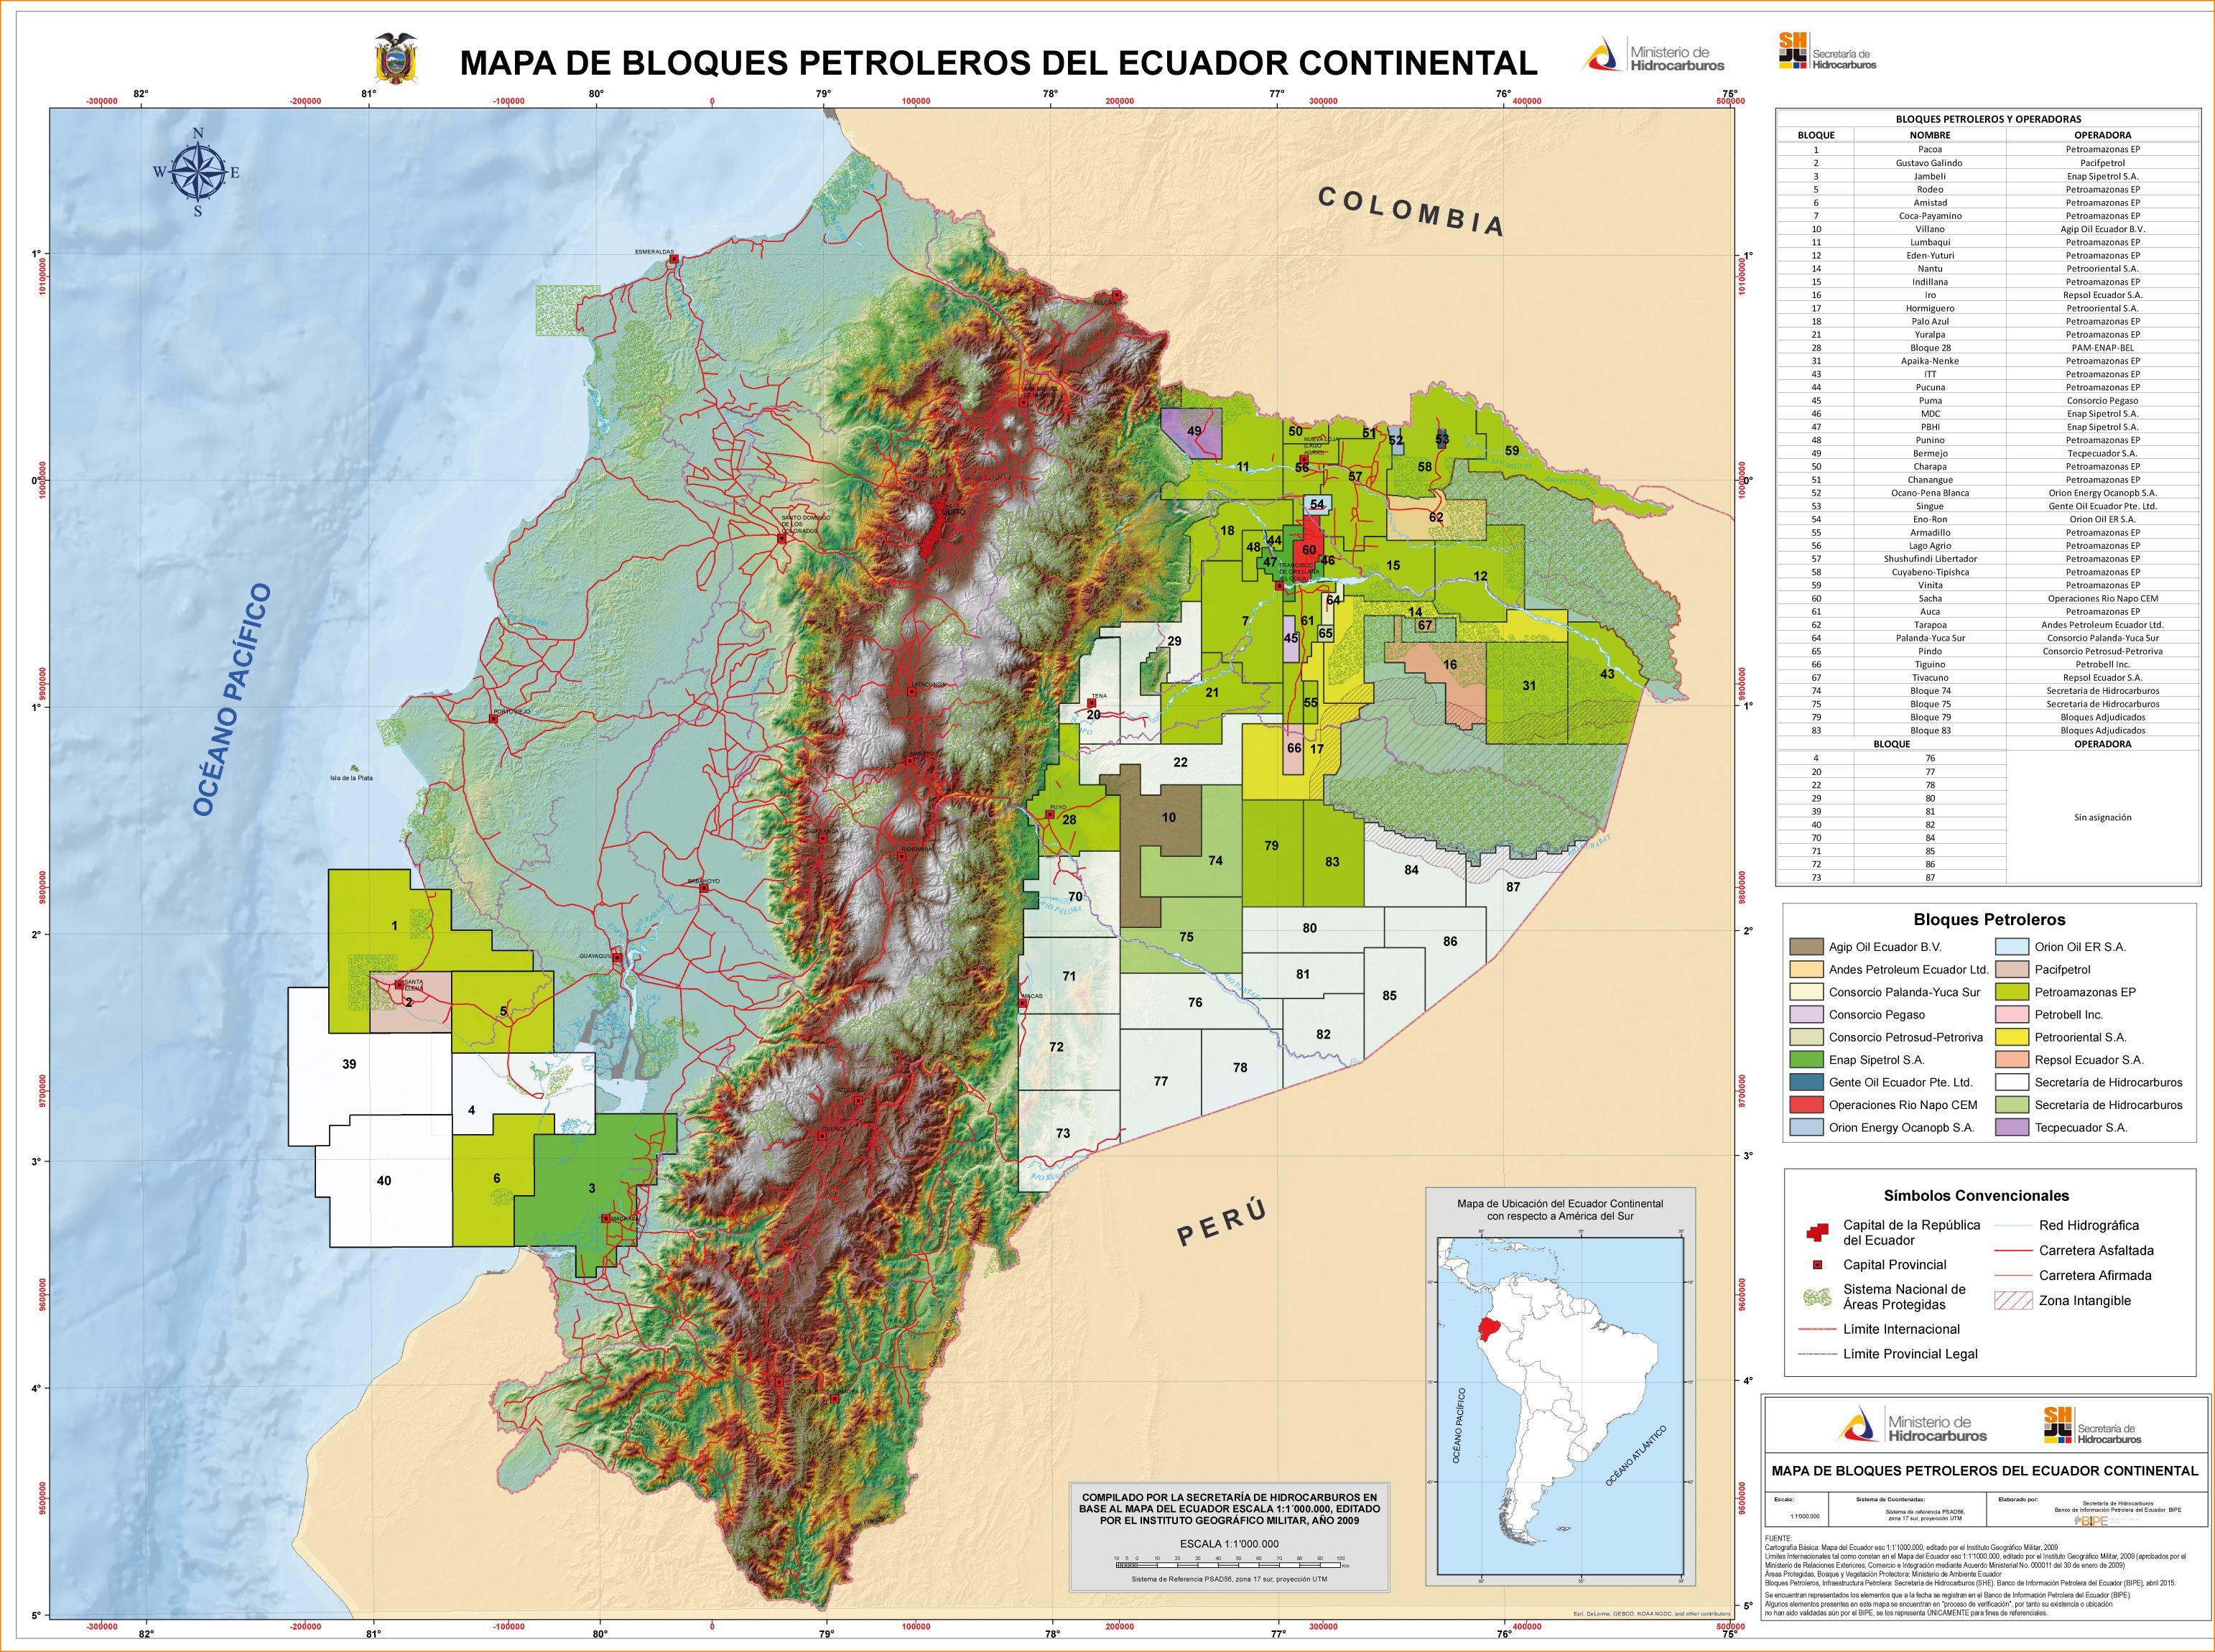 Map of petroleum blocks of Ecuador